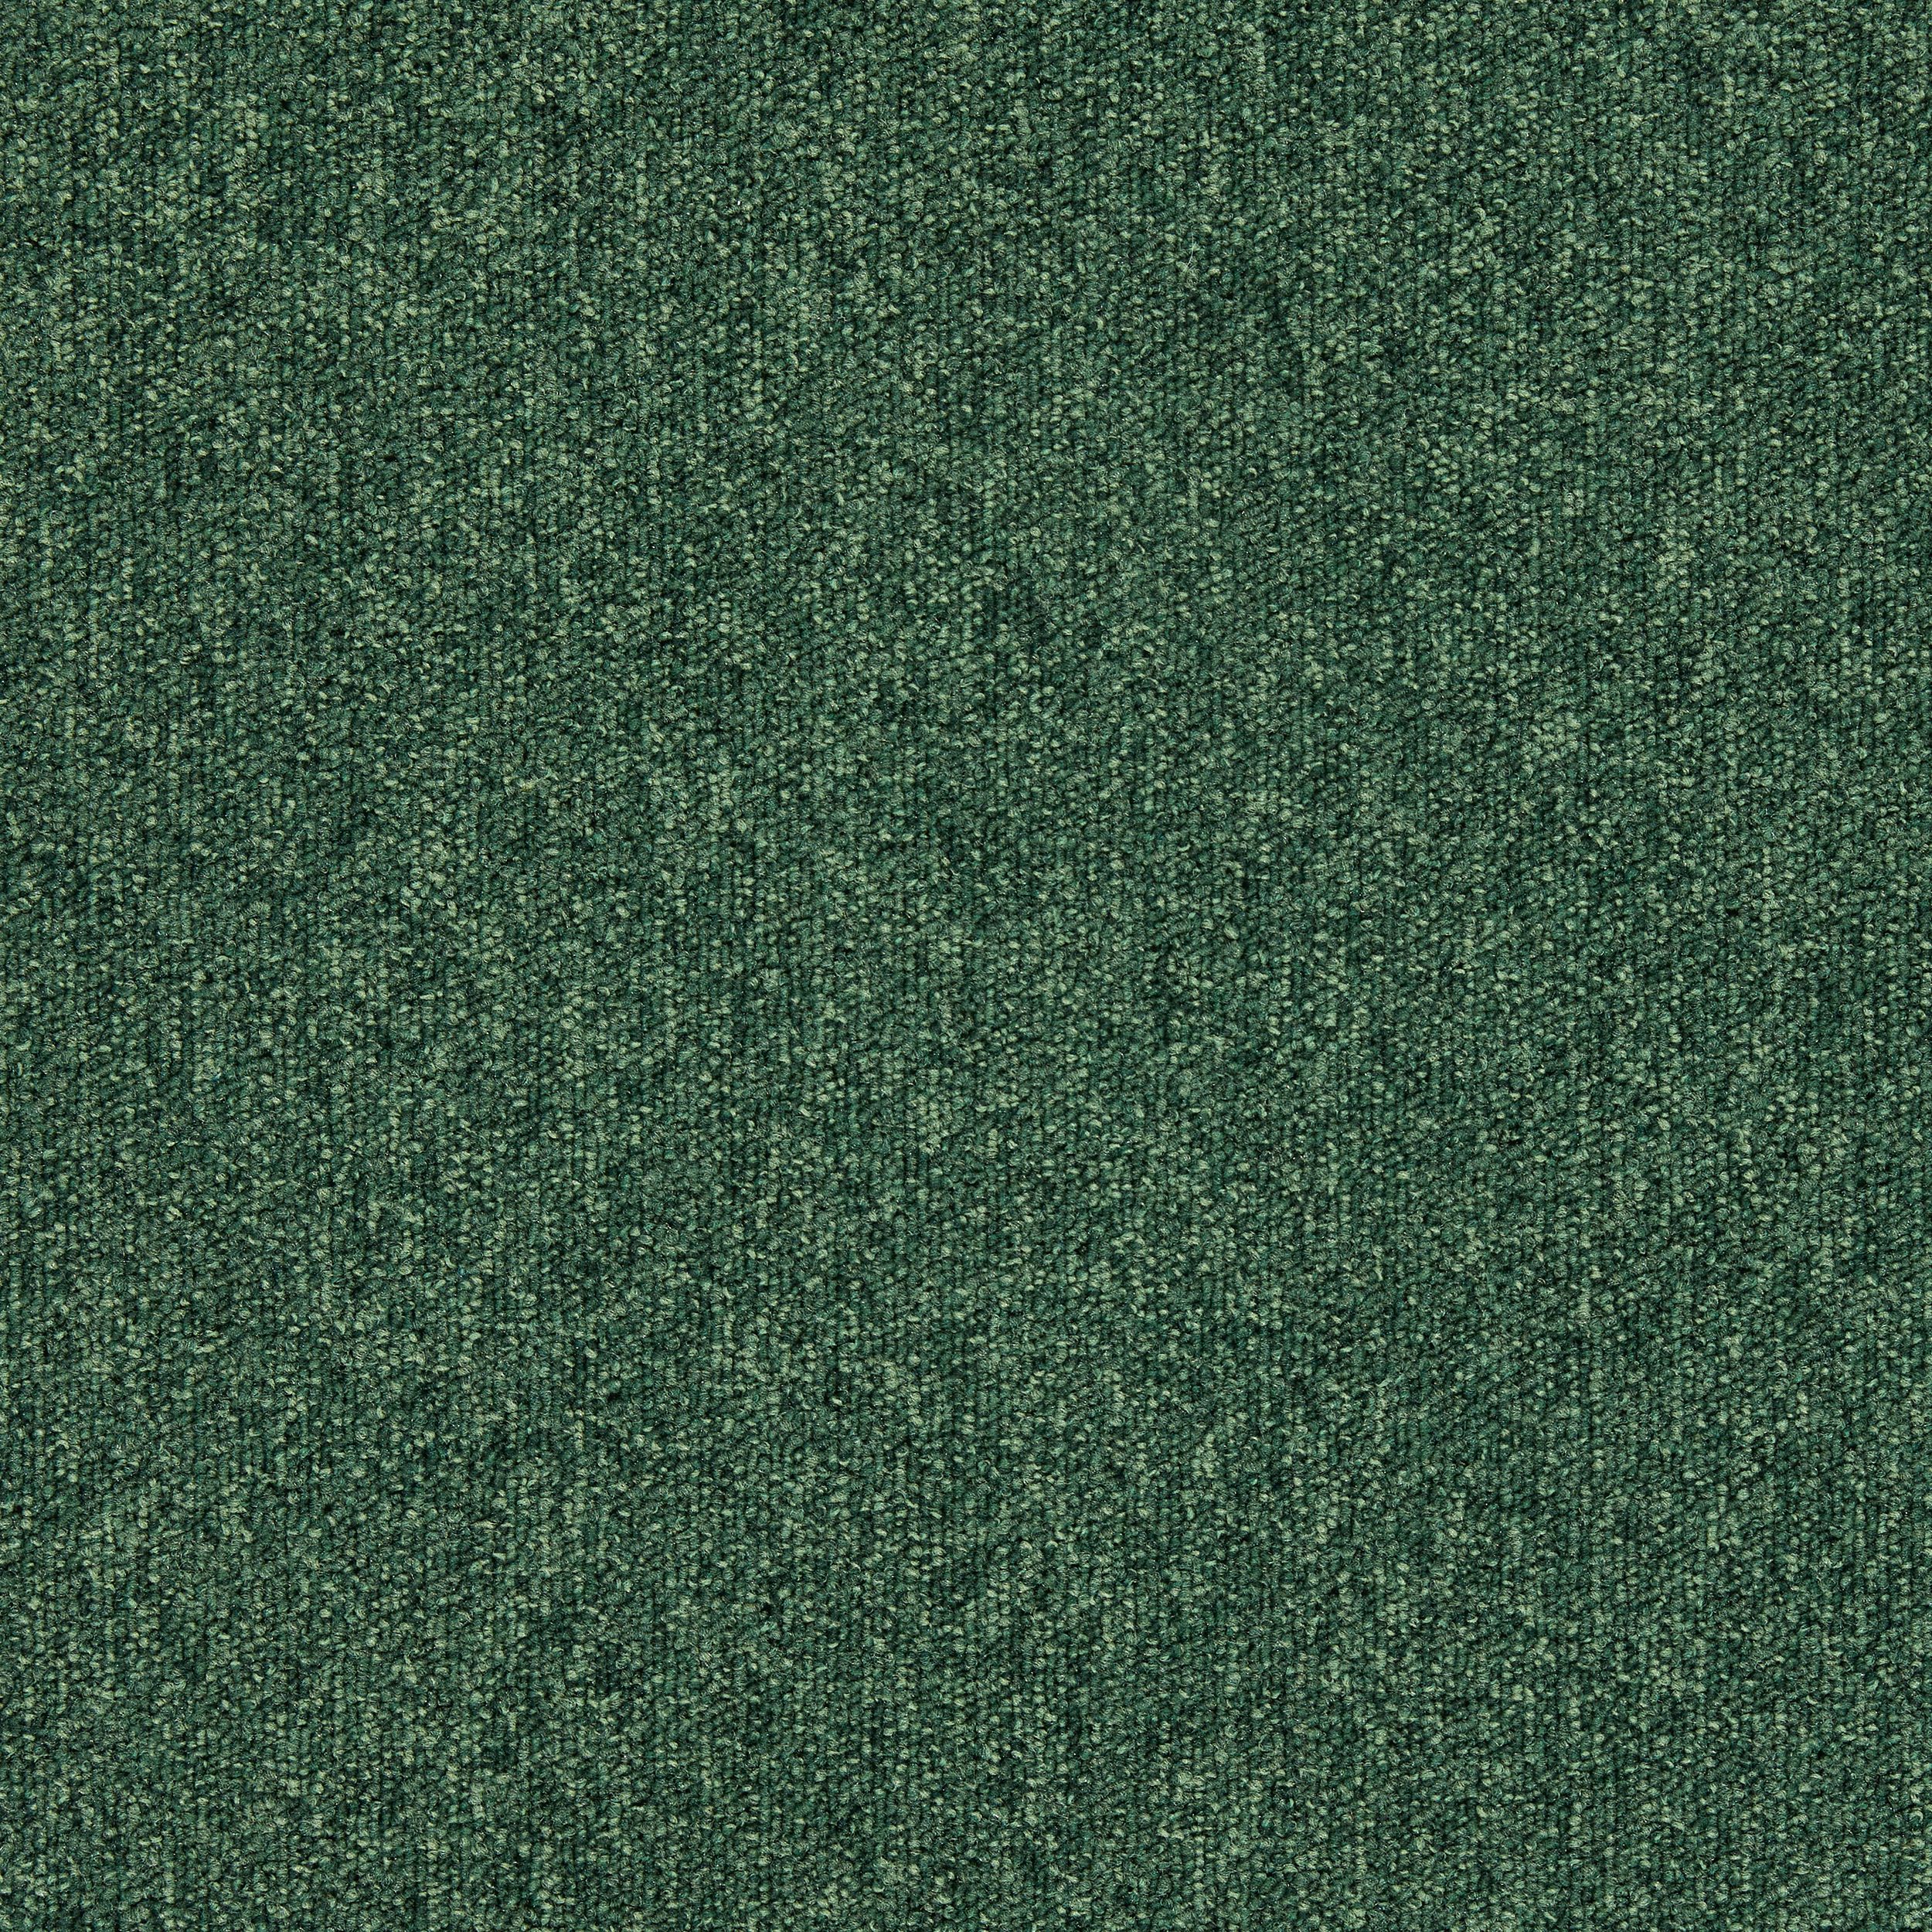 Heuga 727 Carpet Tile In Bottle Green número de imagen 5